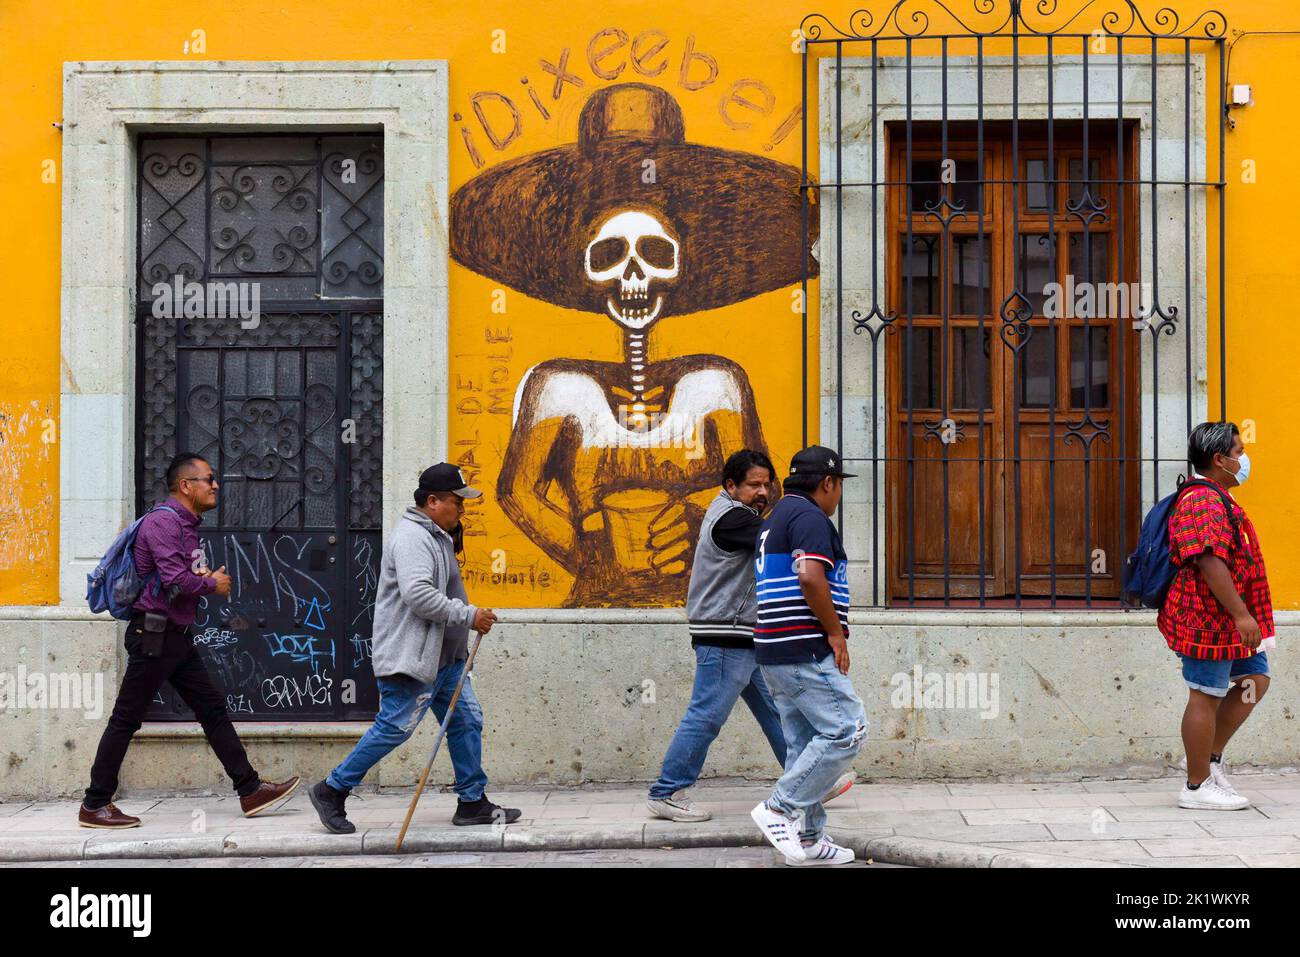 People walking in the historical center of Oaxaca de Juarez, Mexico Stock Photo